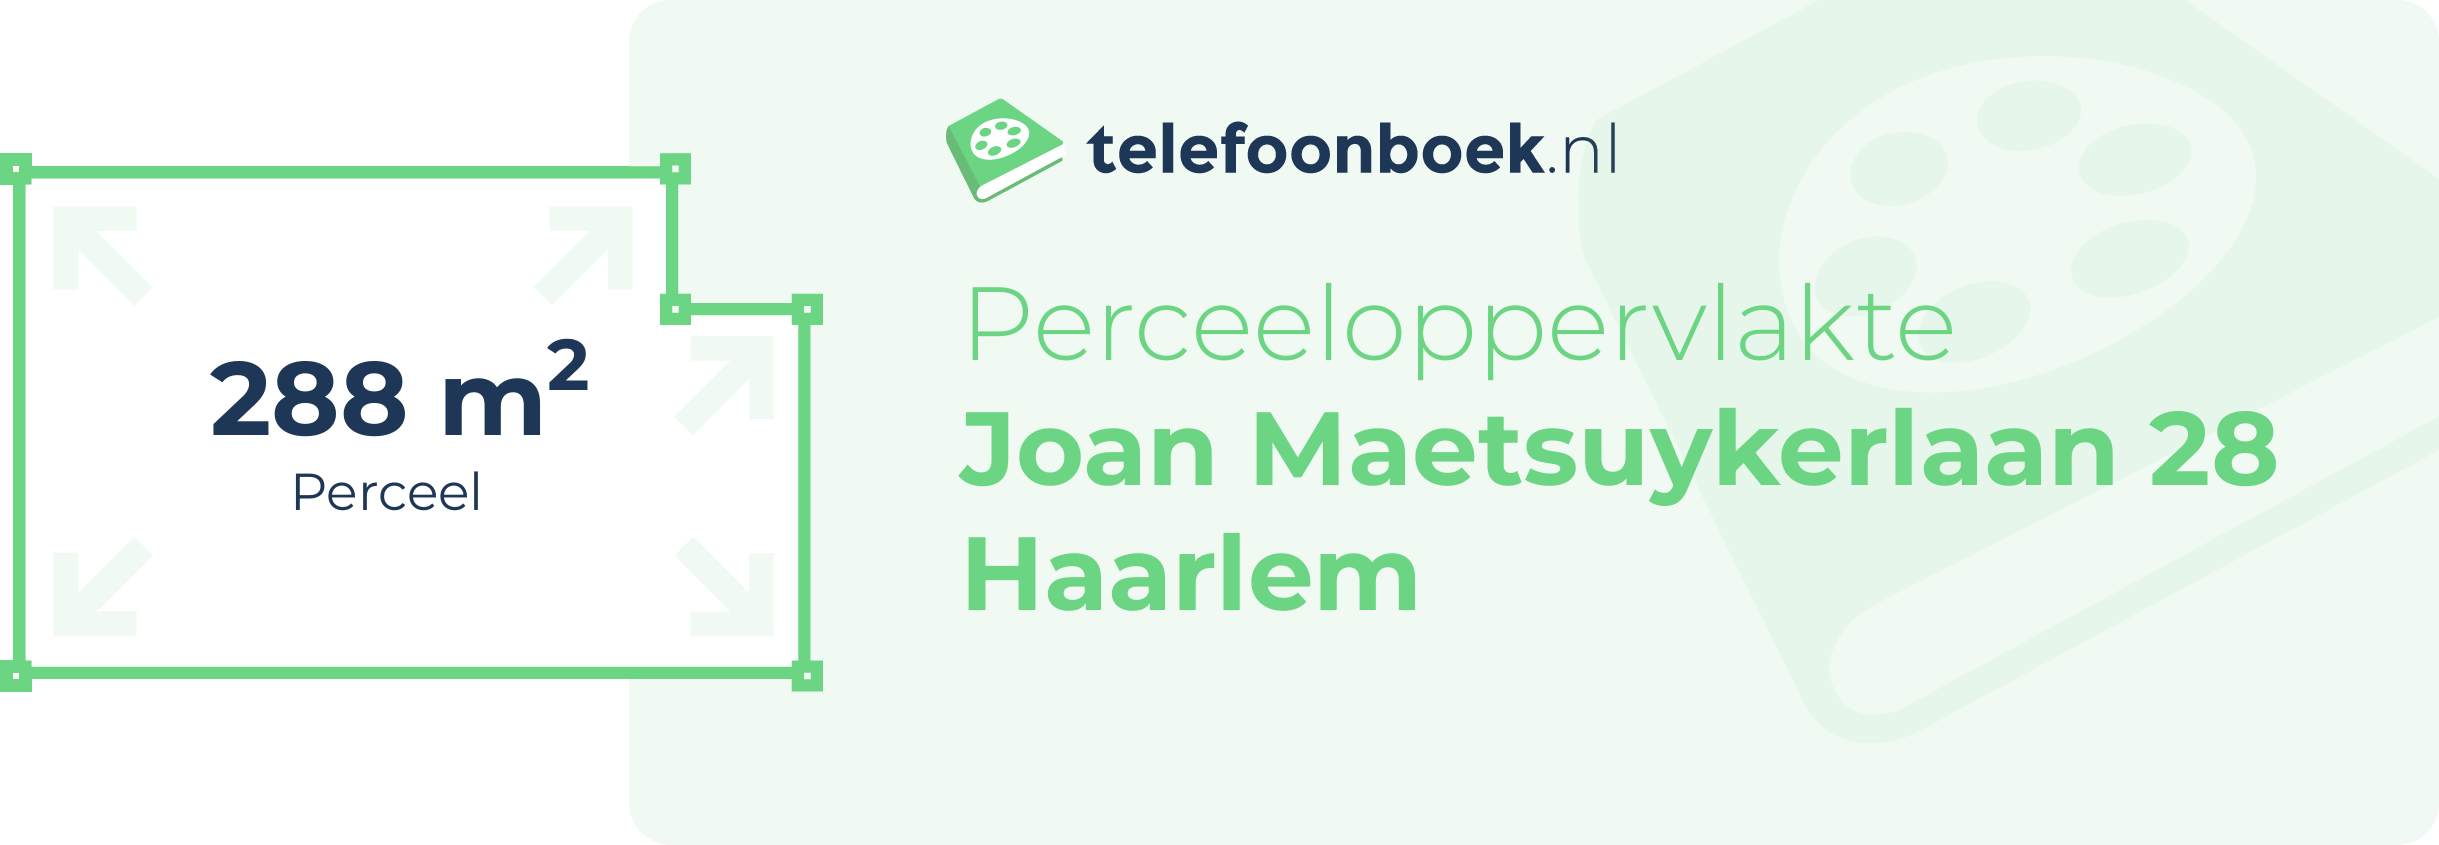 Perceeloppervlakte Joan Maetsuykerlaan 28 Haarlem